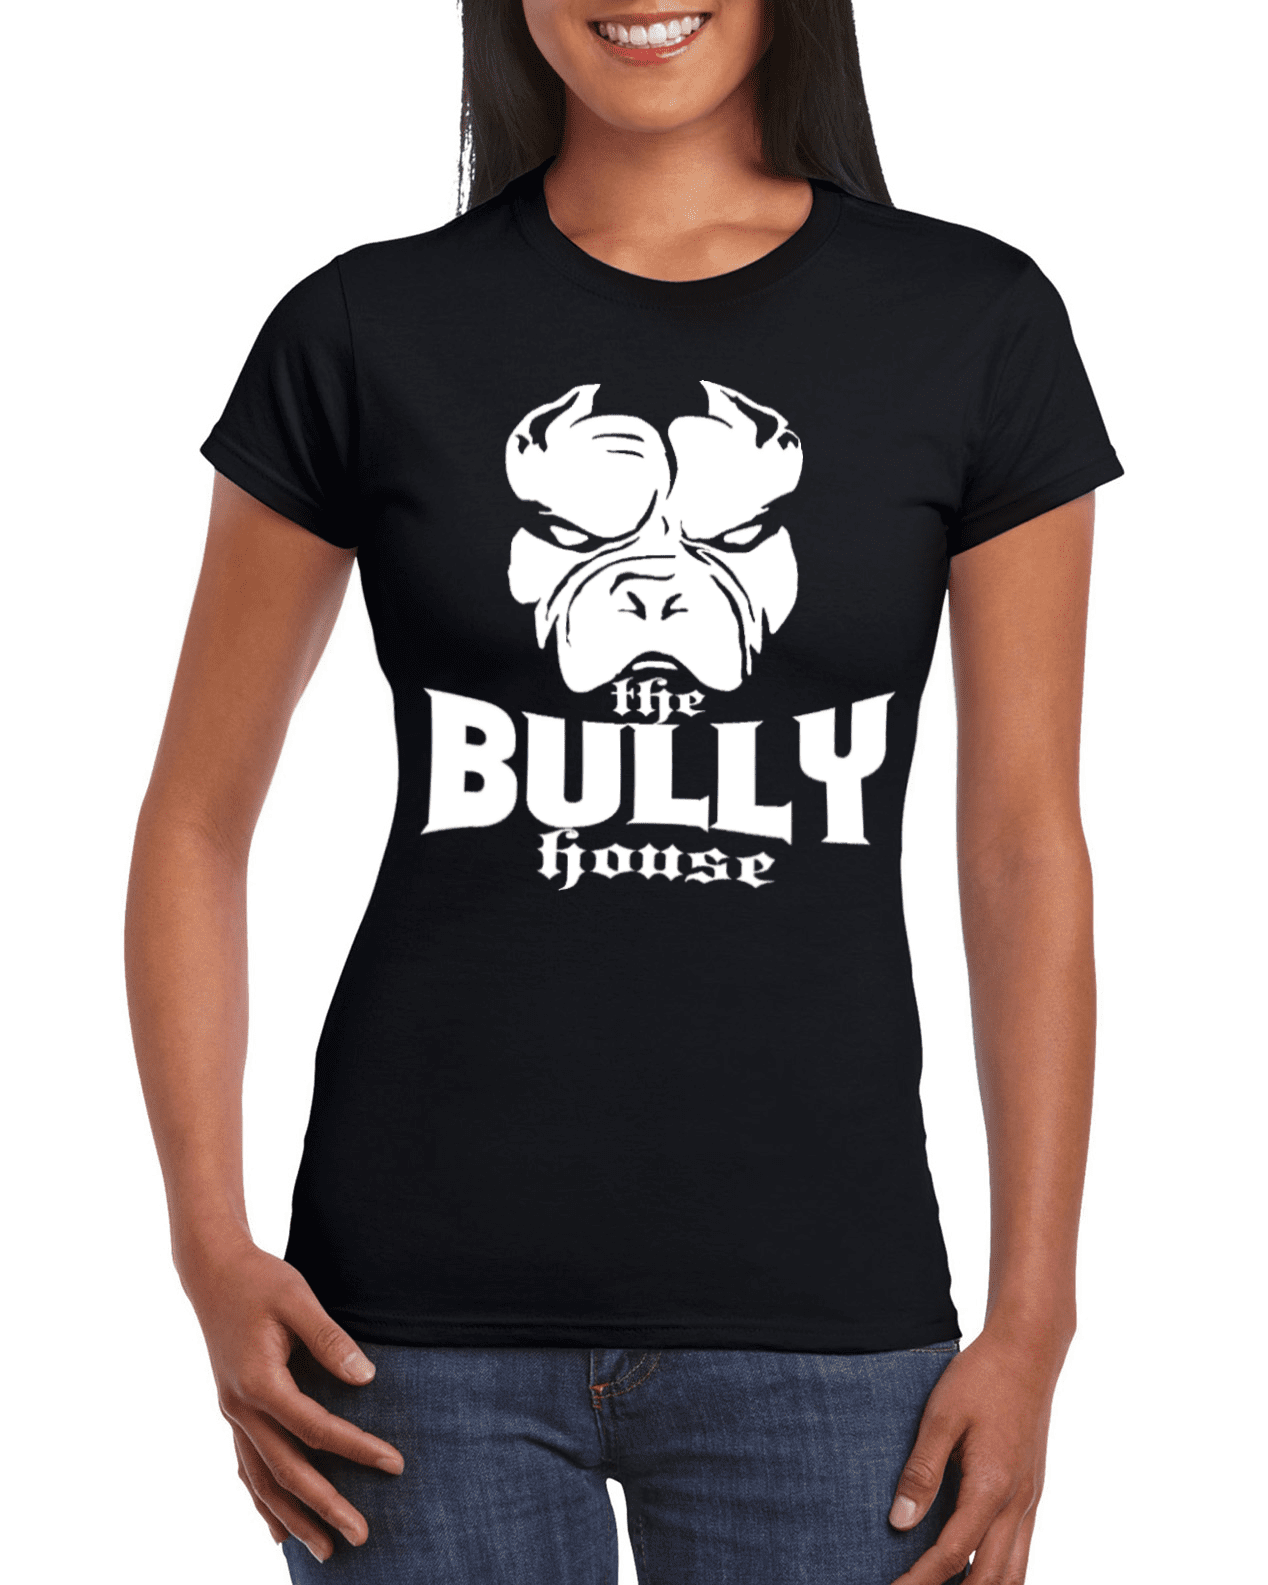 The Bully House -- T-SHIRT - WOMENS  CUT (White print)